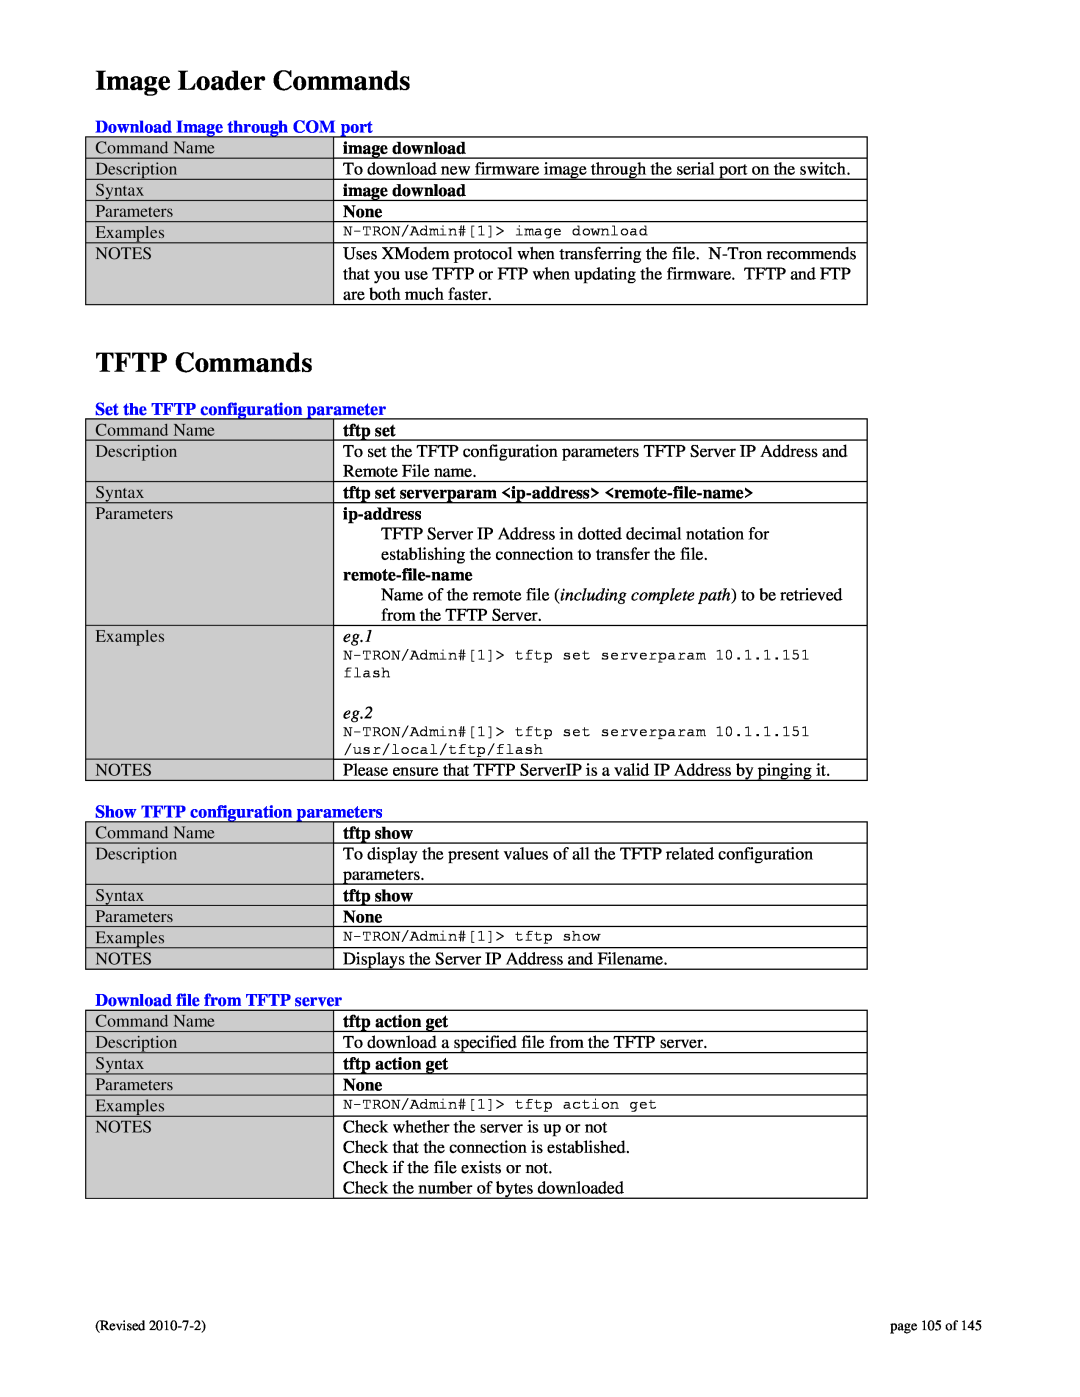 N-Tron 9000 Image Loader Commands, TFTP Commands, Download Image through COM port, Set the TFTP configuration parameter 